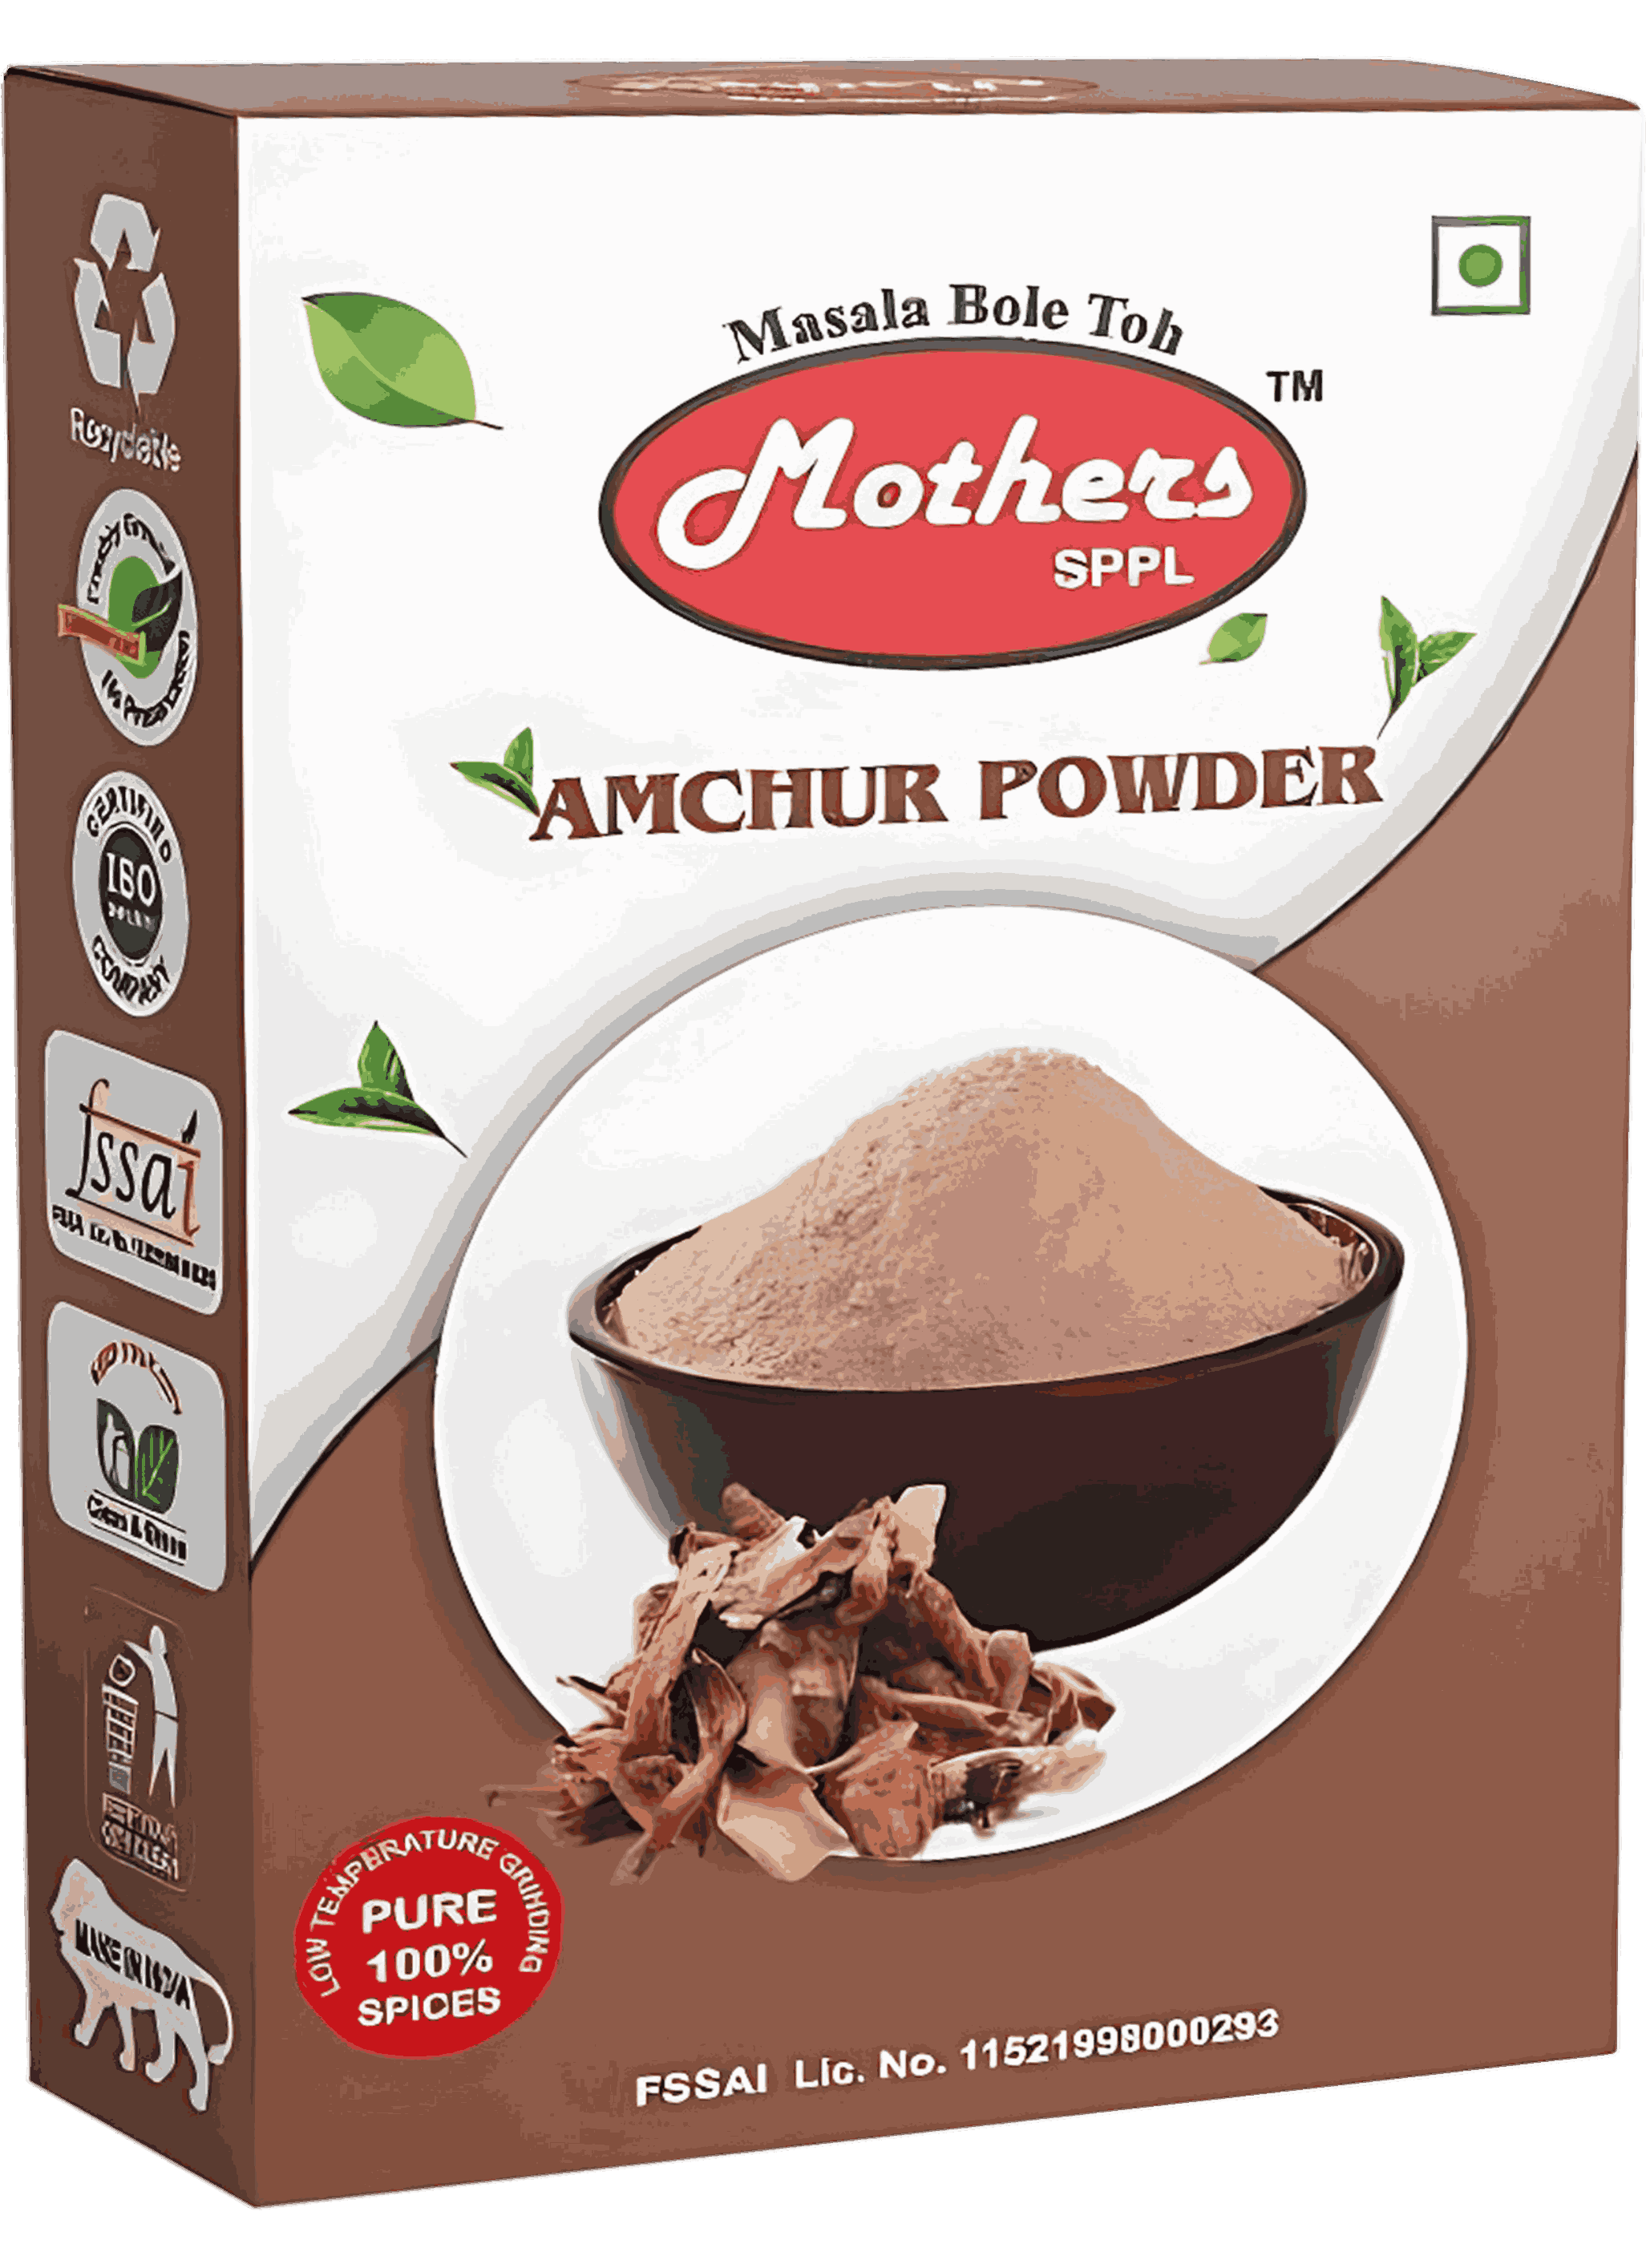 Mothers SPPL's Amchur Powder